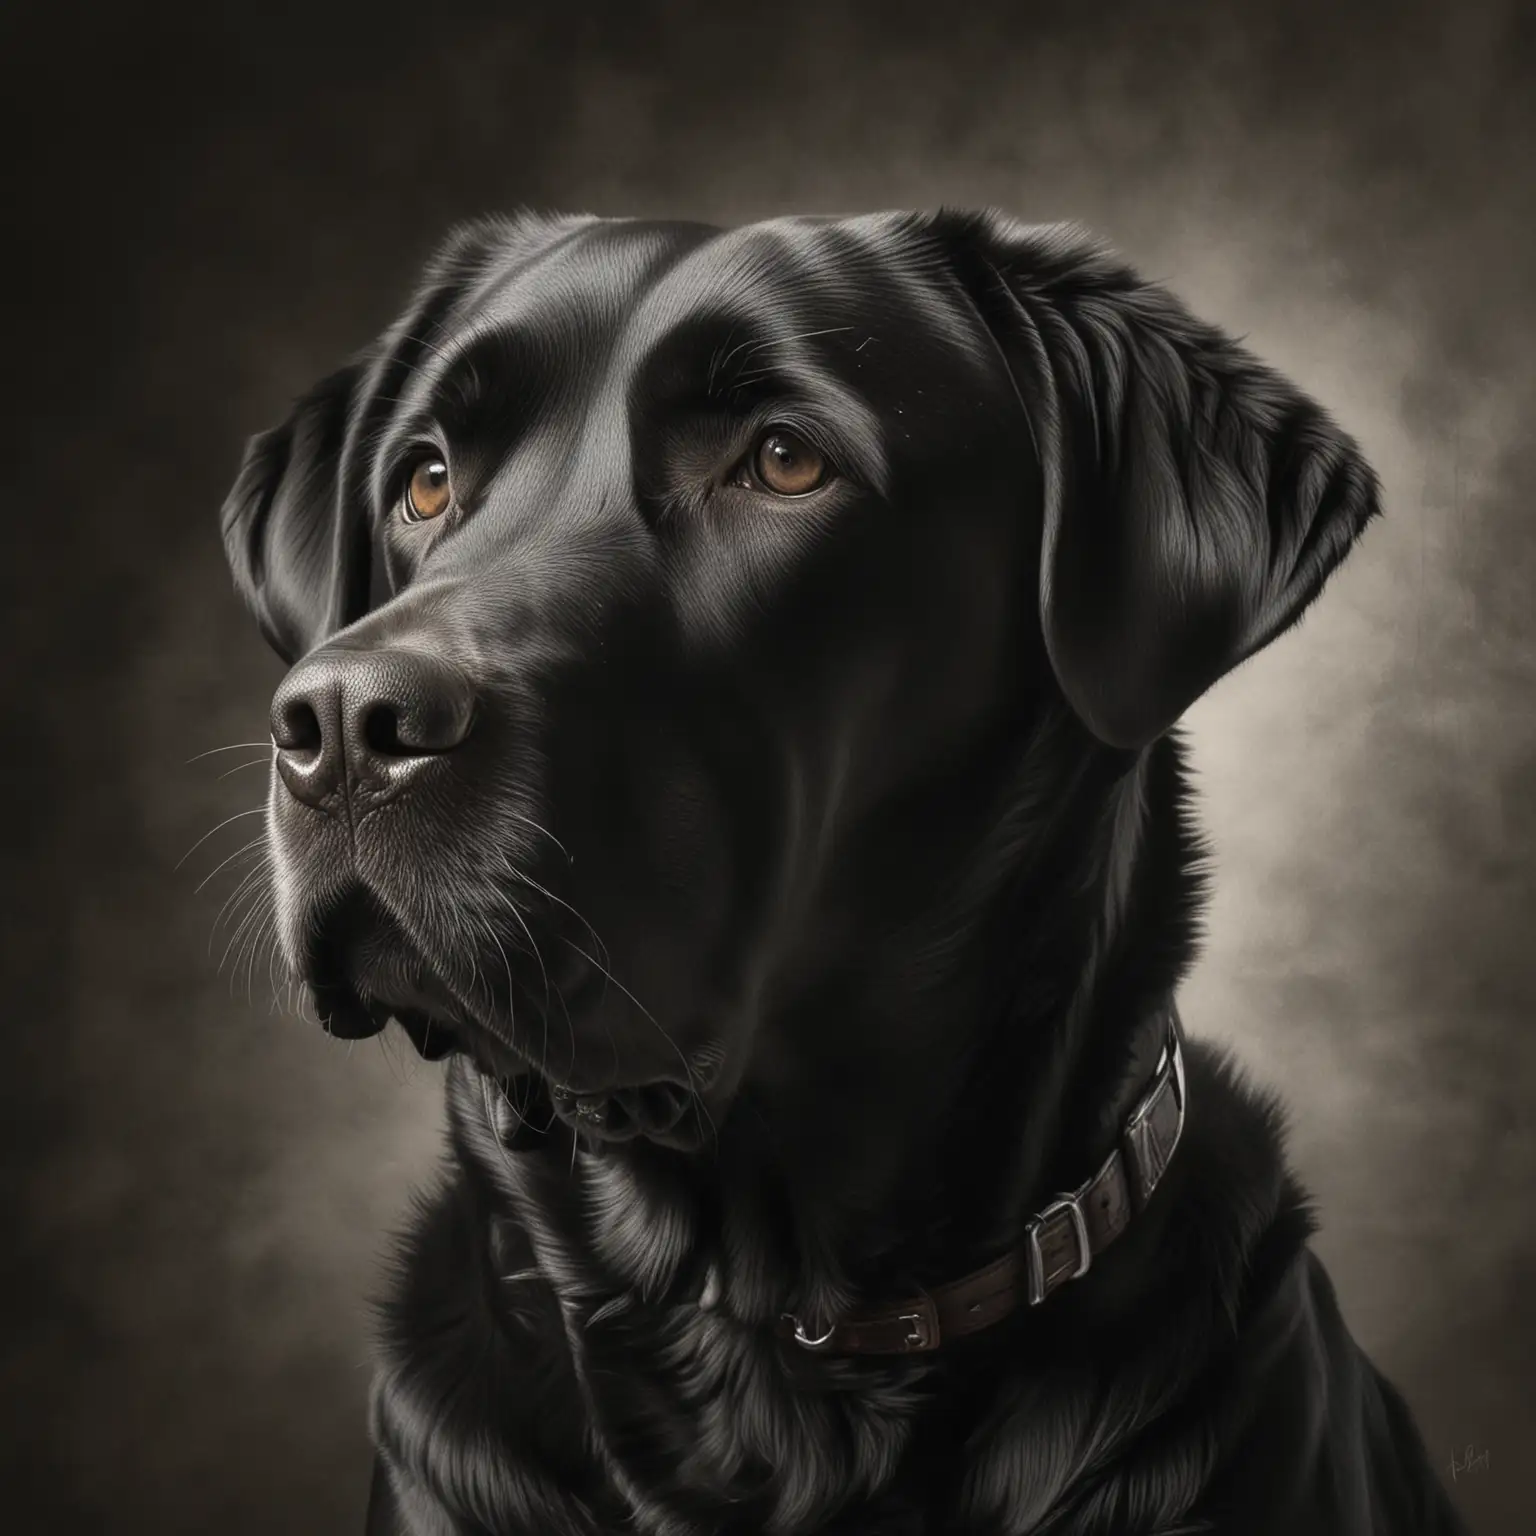 Expressive Black Labrador Retriever Portrait in Bulgarian Expressionist Style